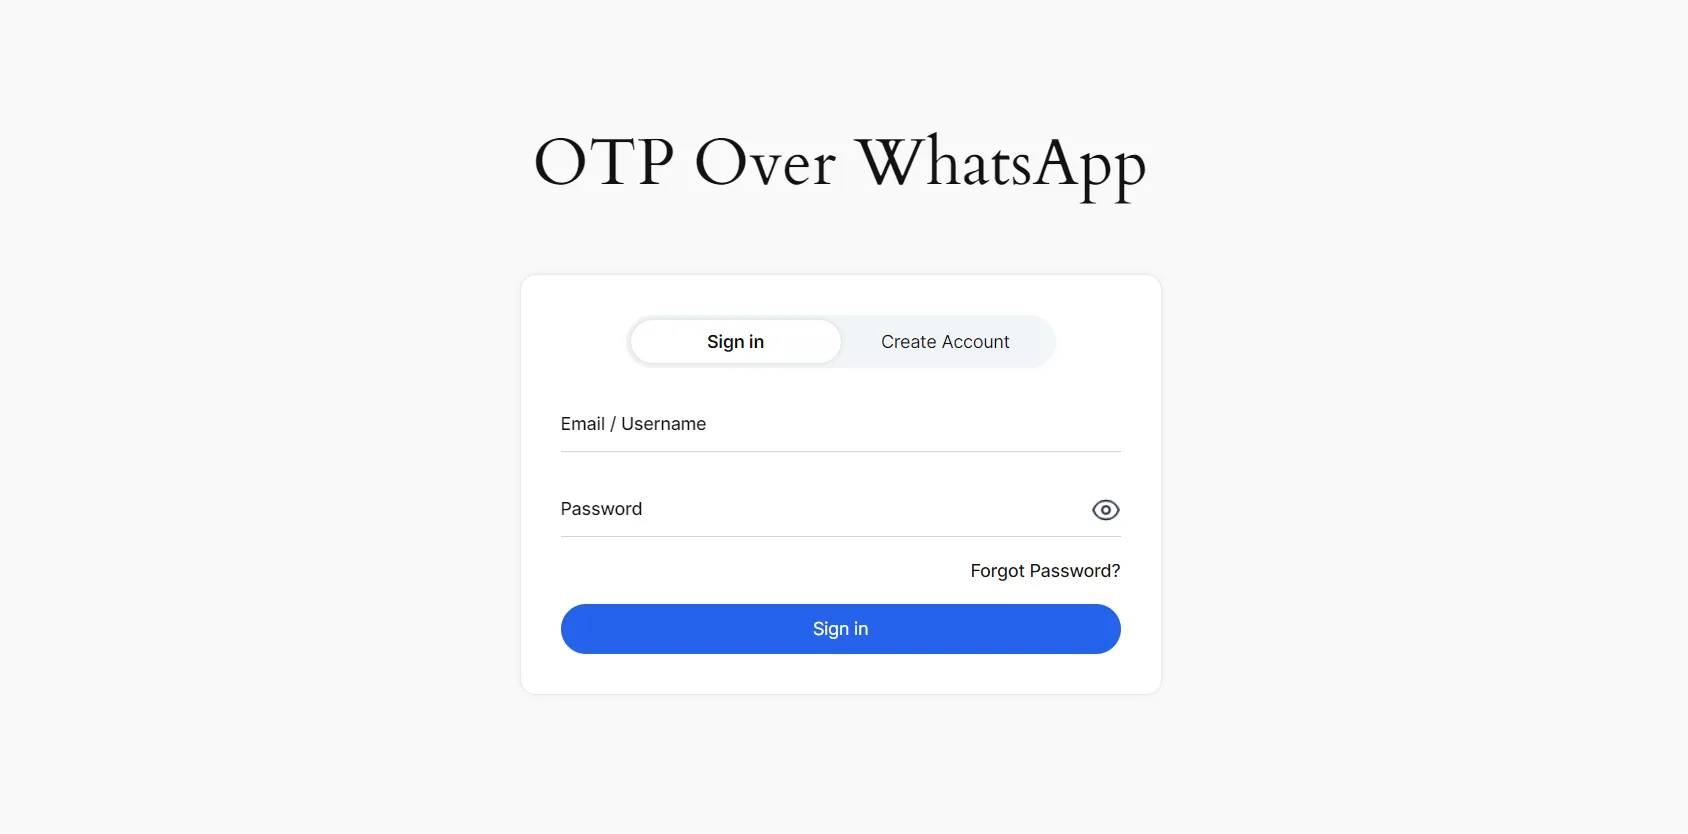 WhatsApp Login with OTP - Whatsapp login page